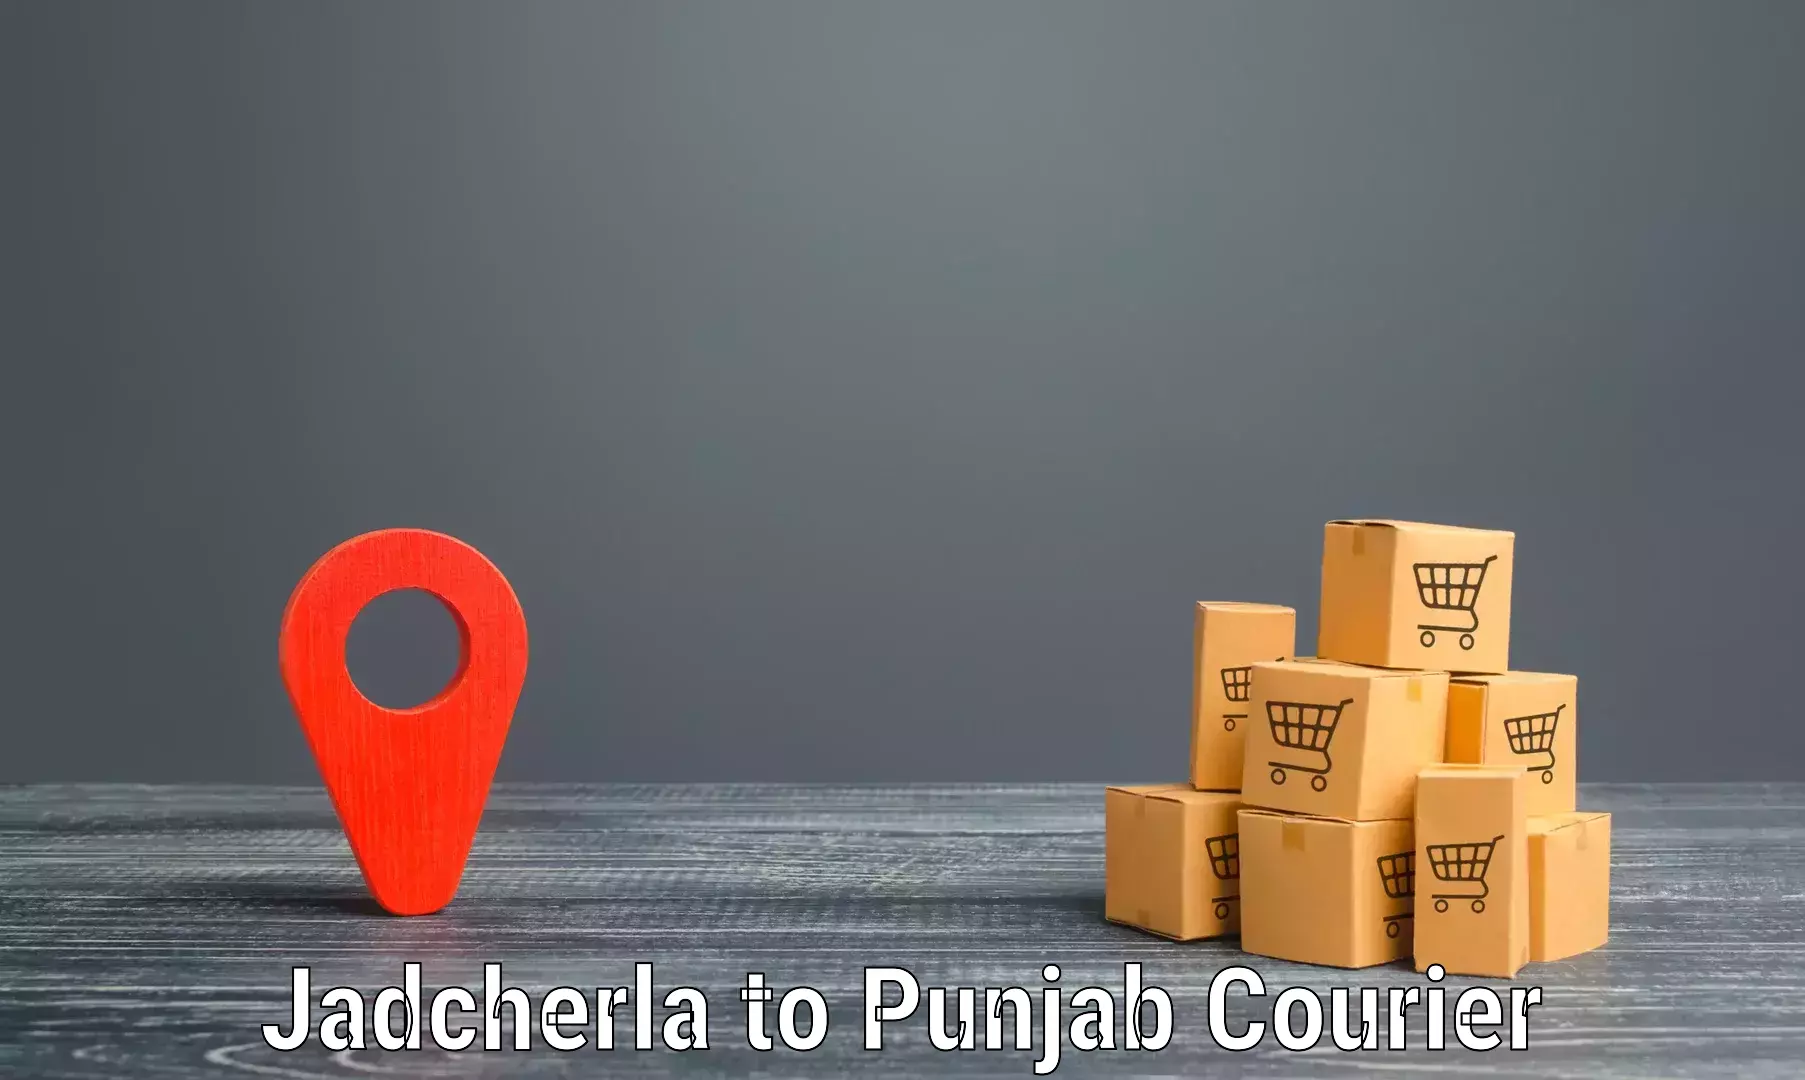 Courier service comparison Jadcherla to Zirakpur